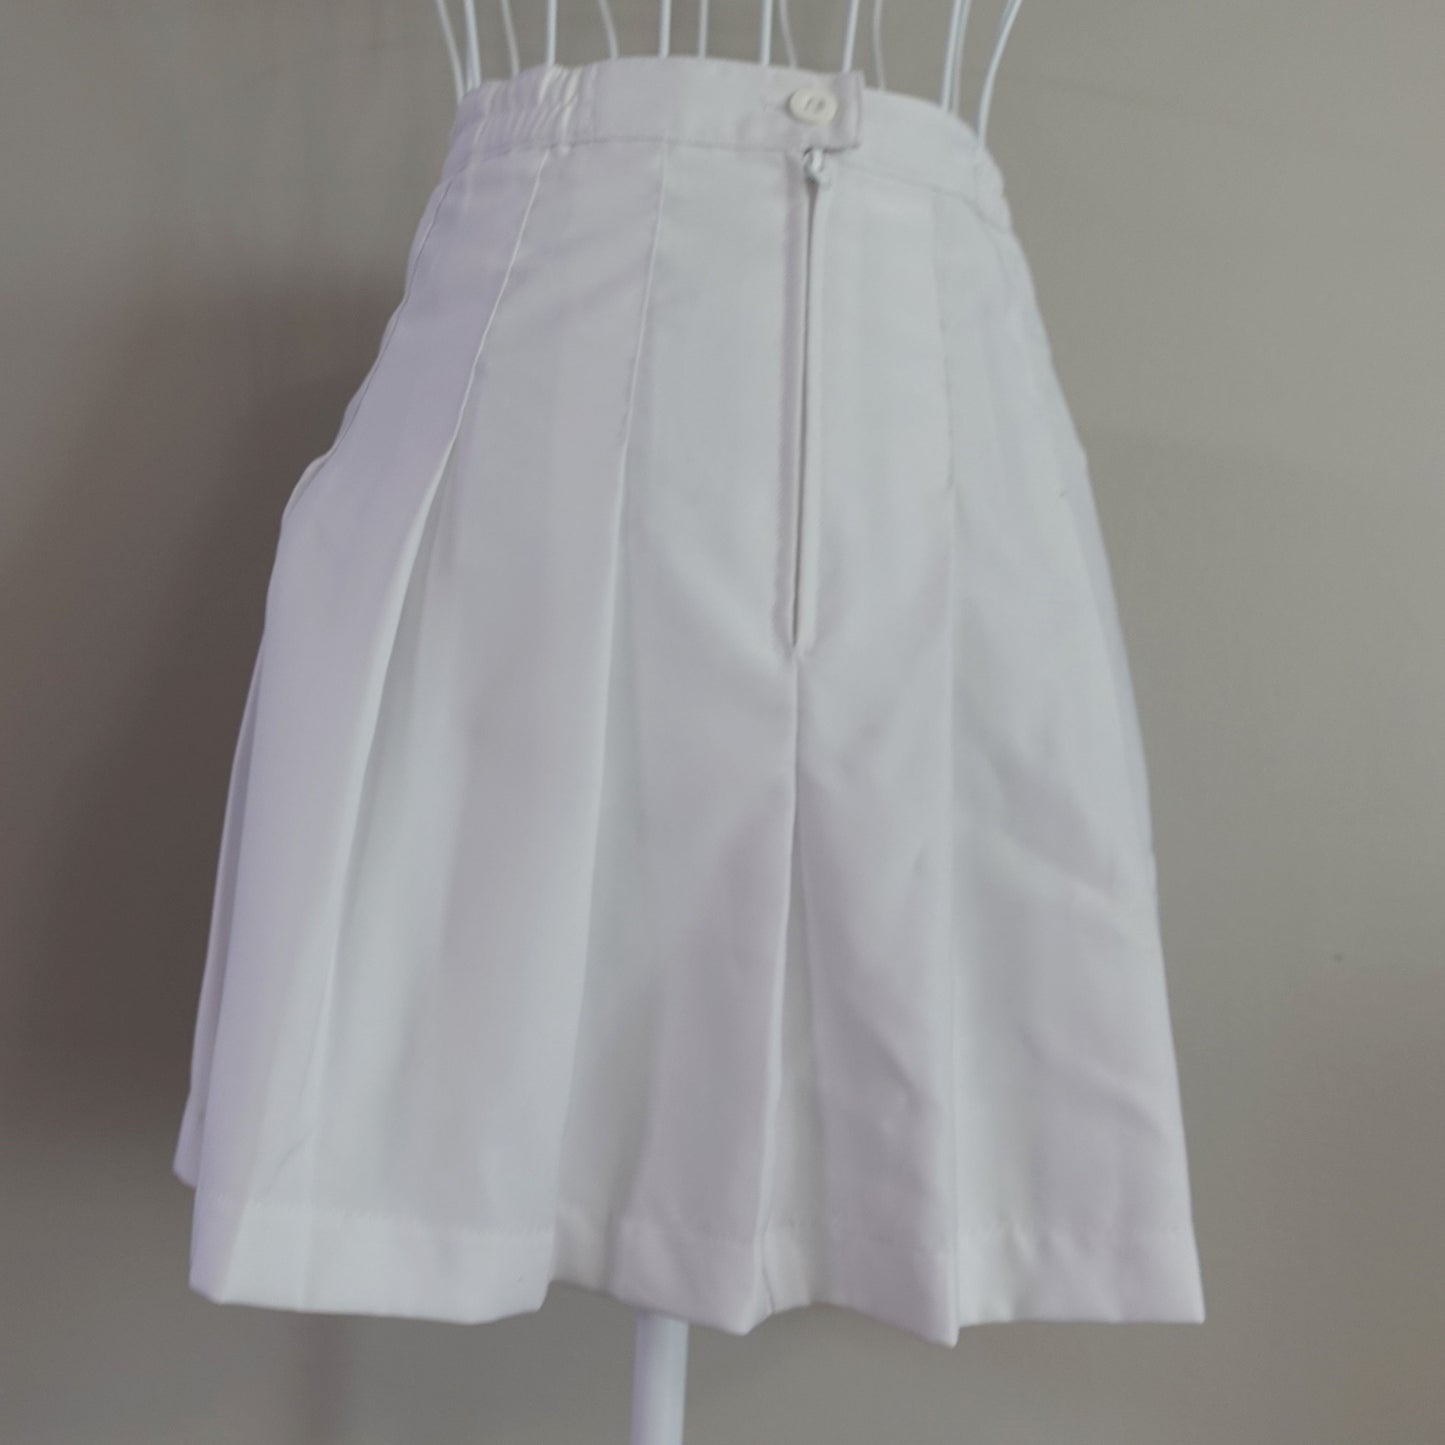 white pleated tennis skirt